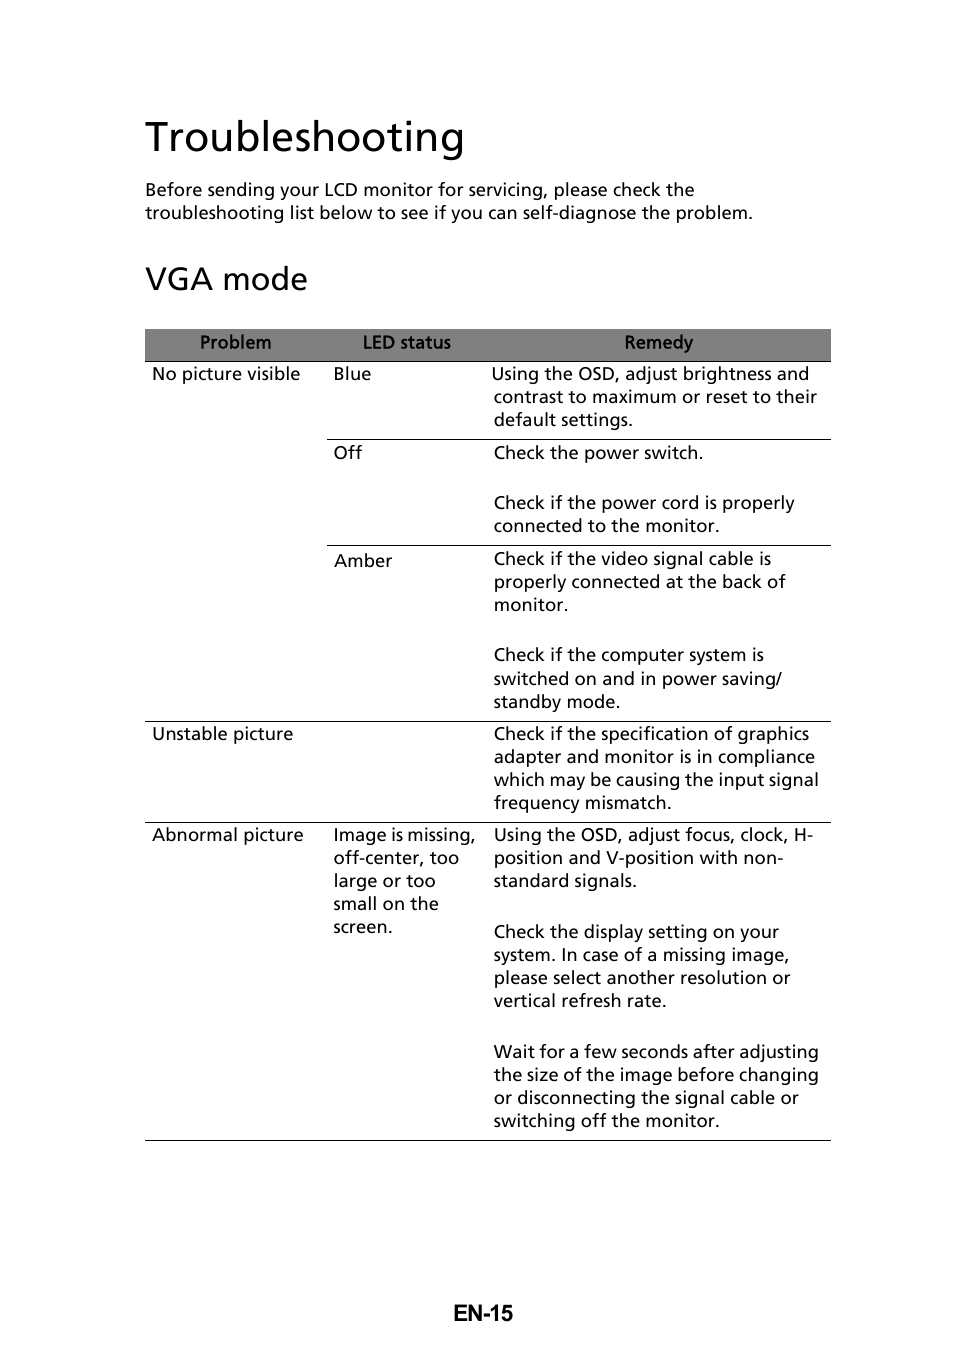 Troubleshooting, Vga mode | Acer UT220HQL User Manual | Page 27 / 30